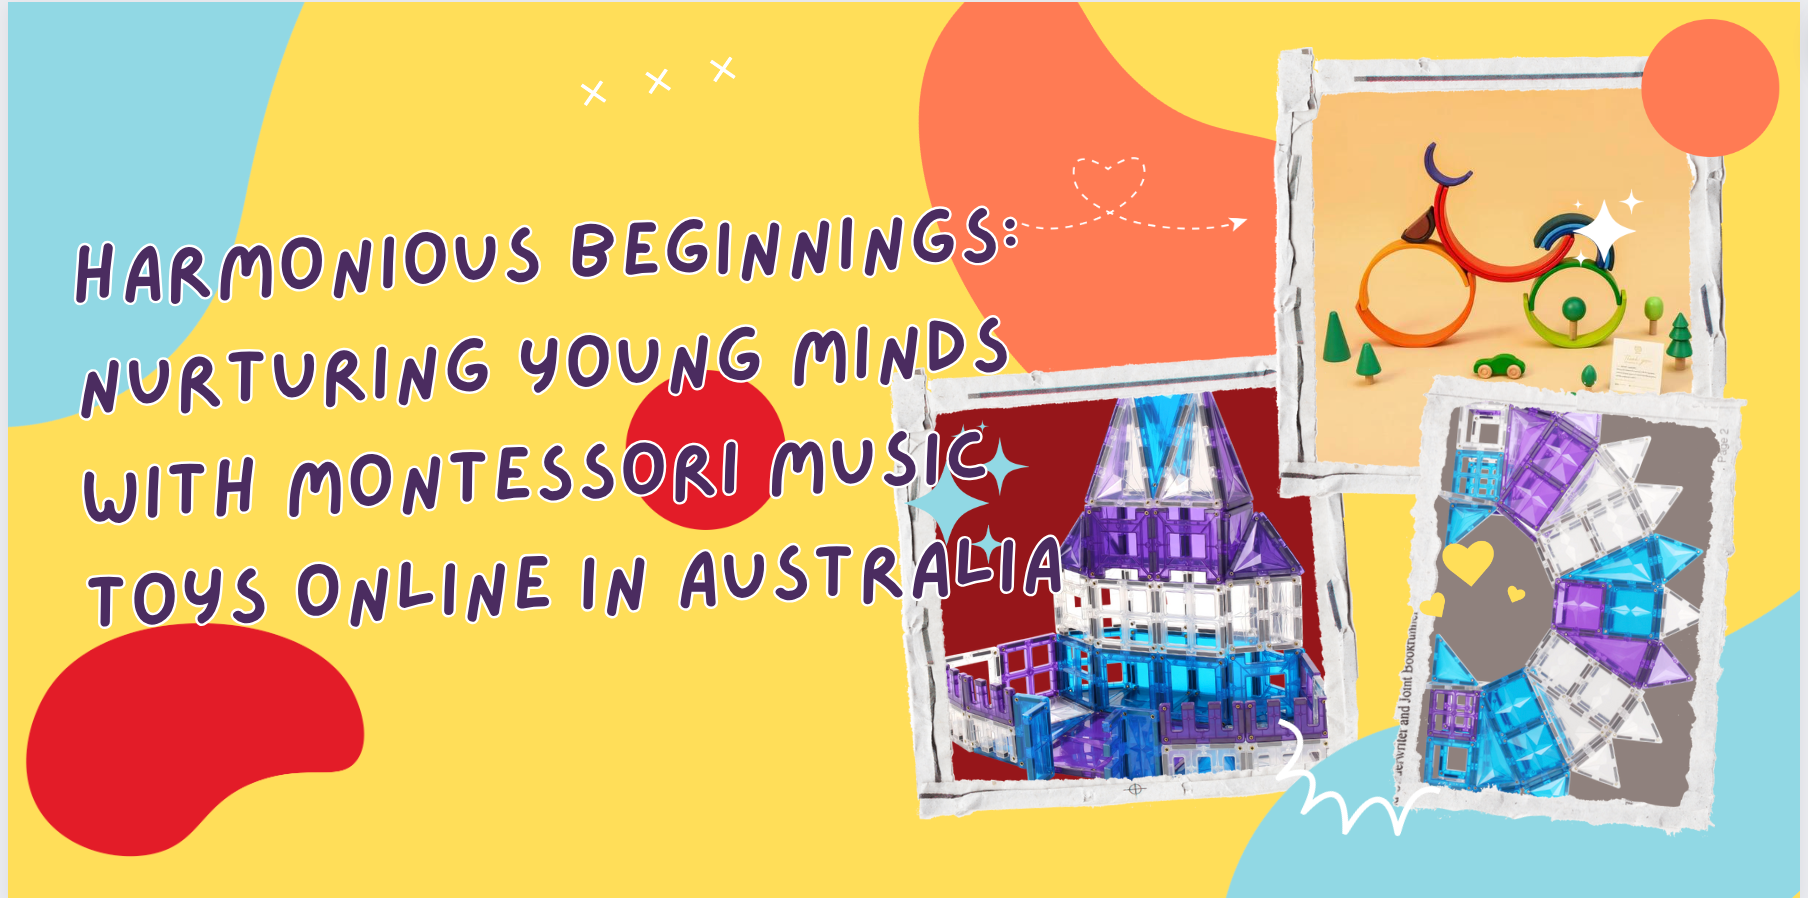 Harmonious Beginnings: Nurturing Young Minds with Montessori Music Toys Online in Australia